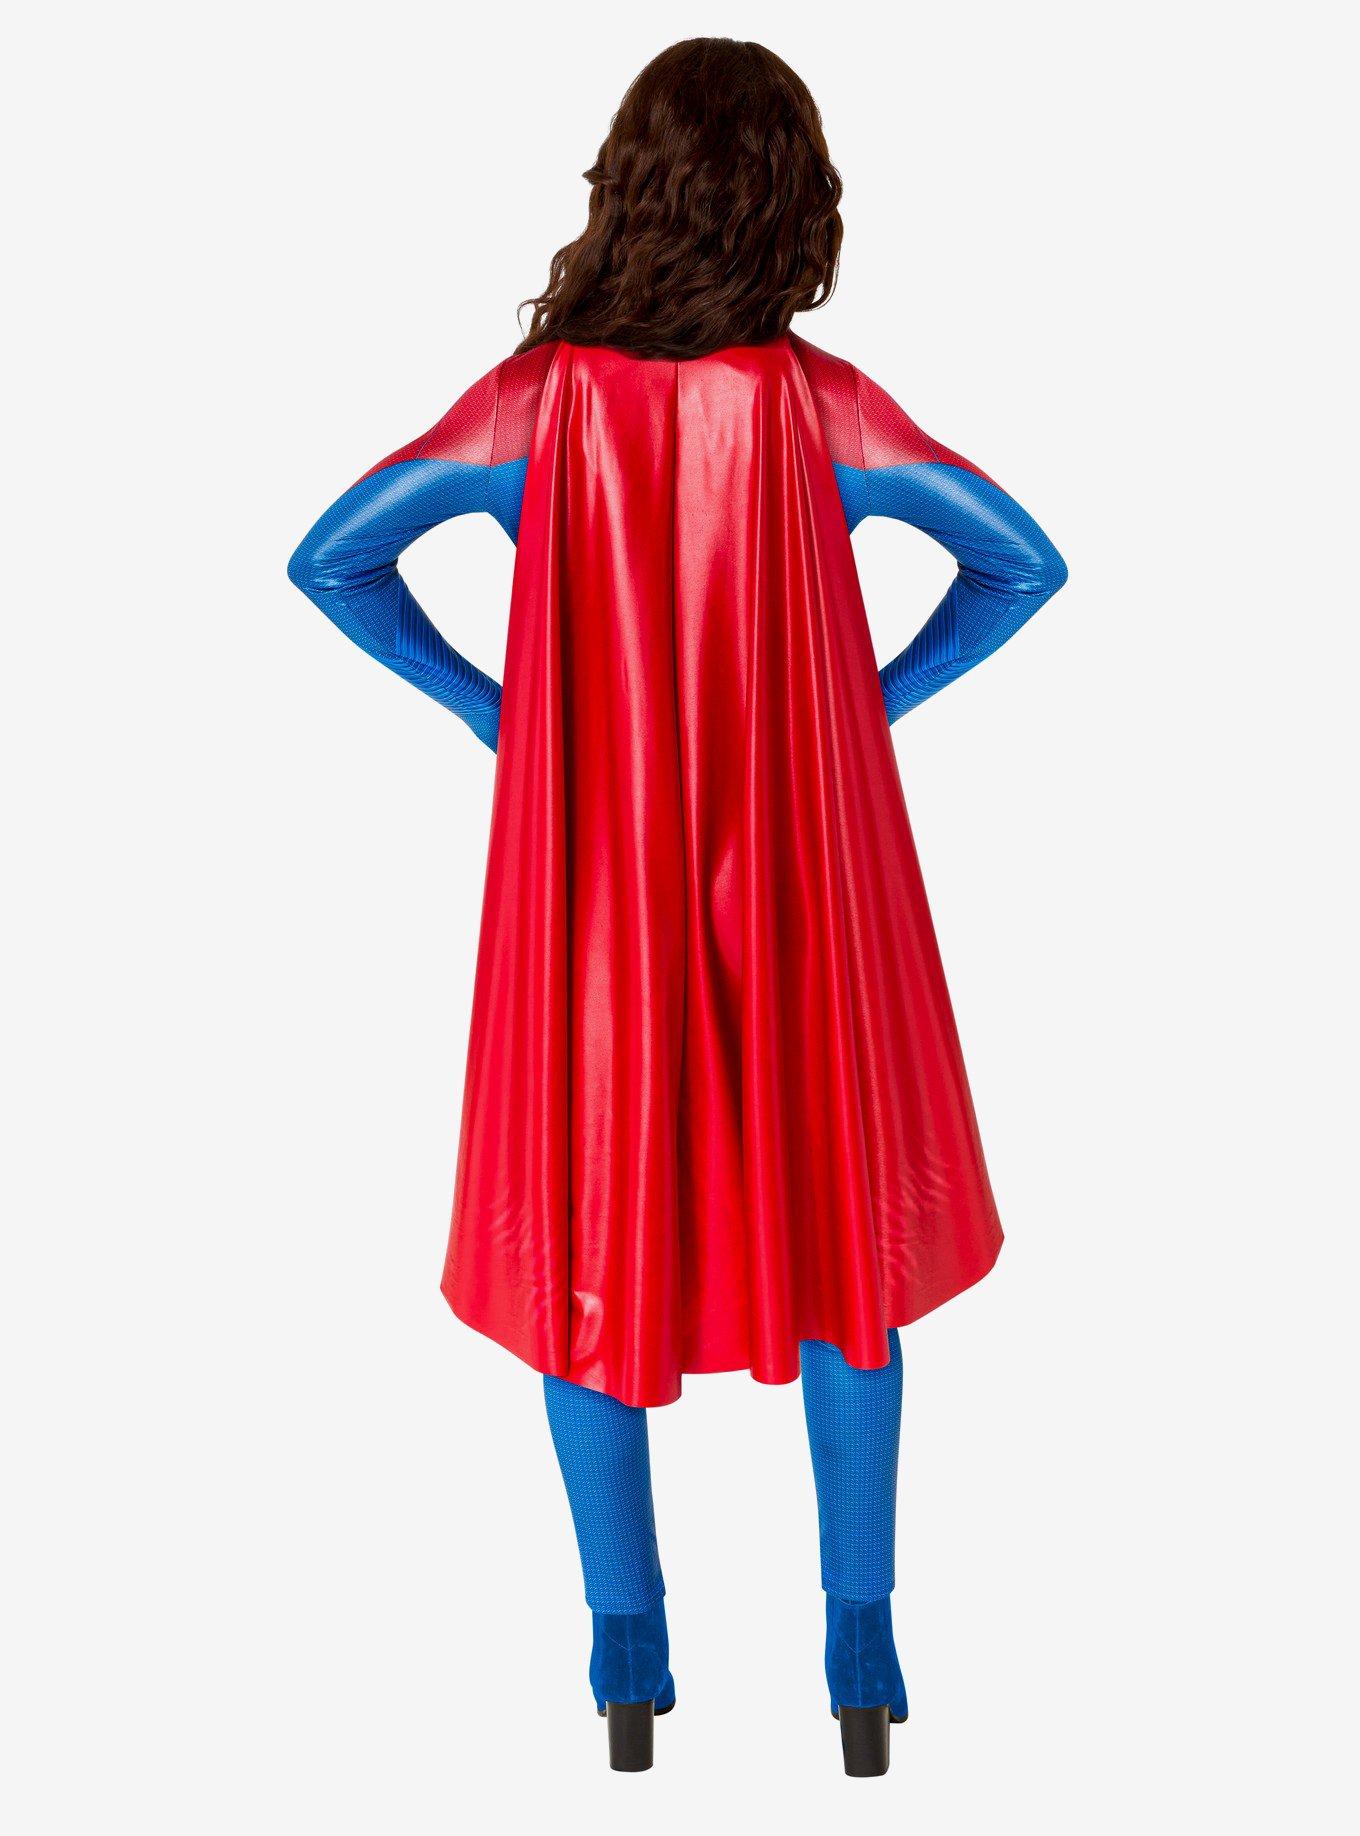 DC Comics Supergirl Adult Costume, BLUE, alternate